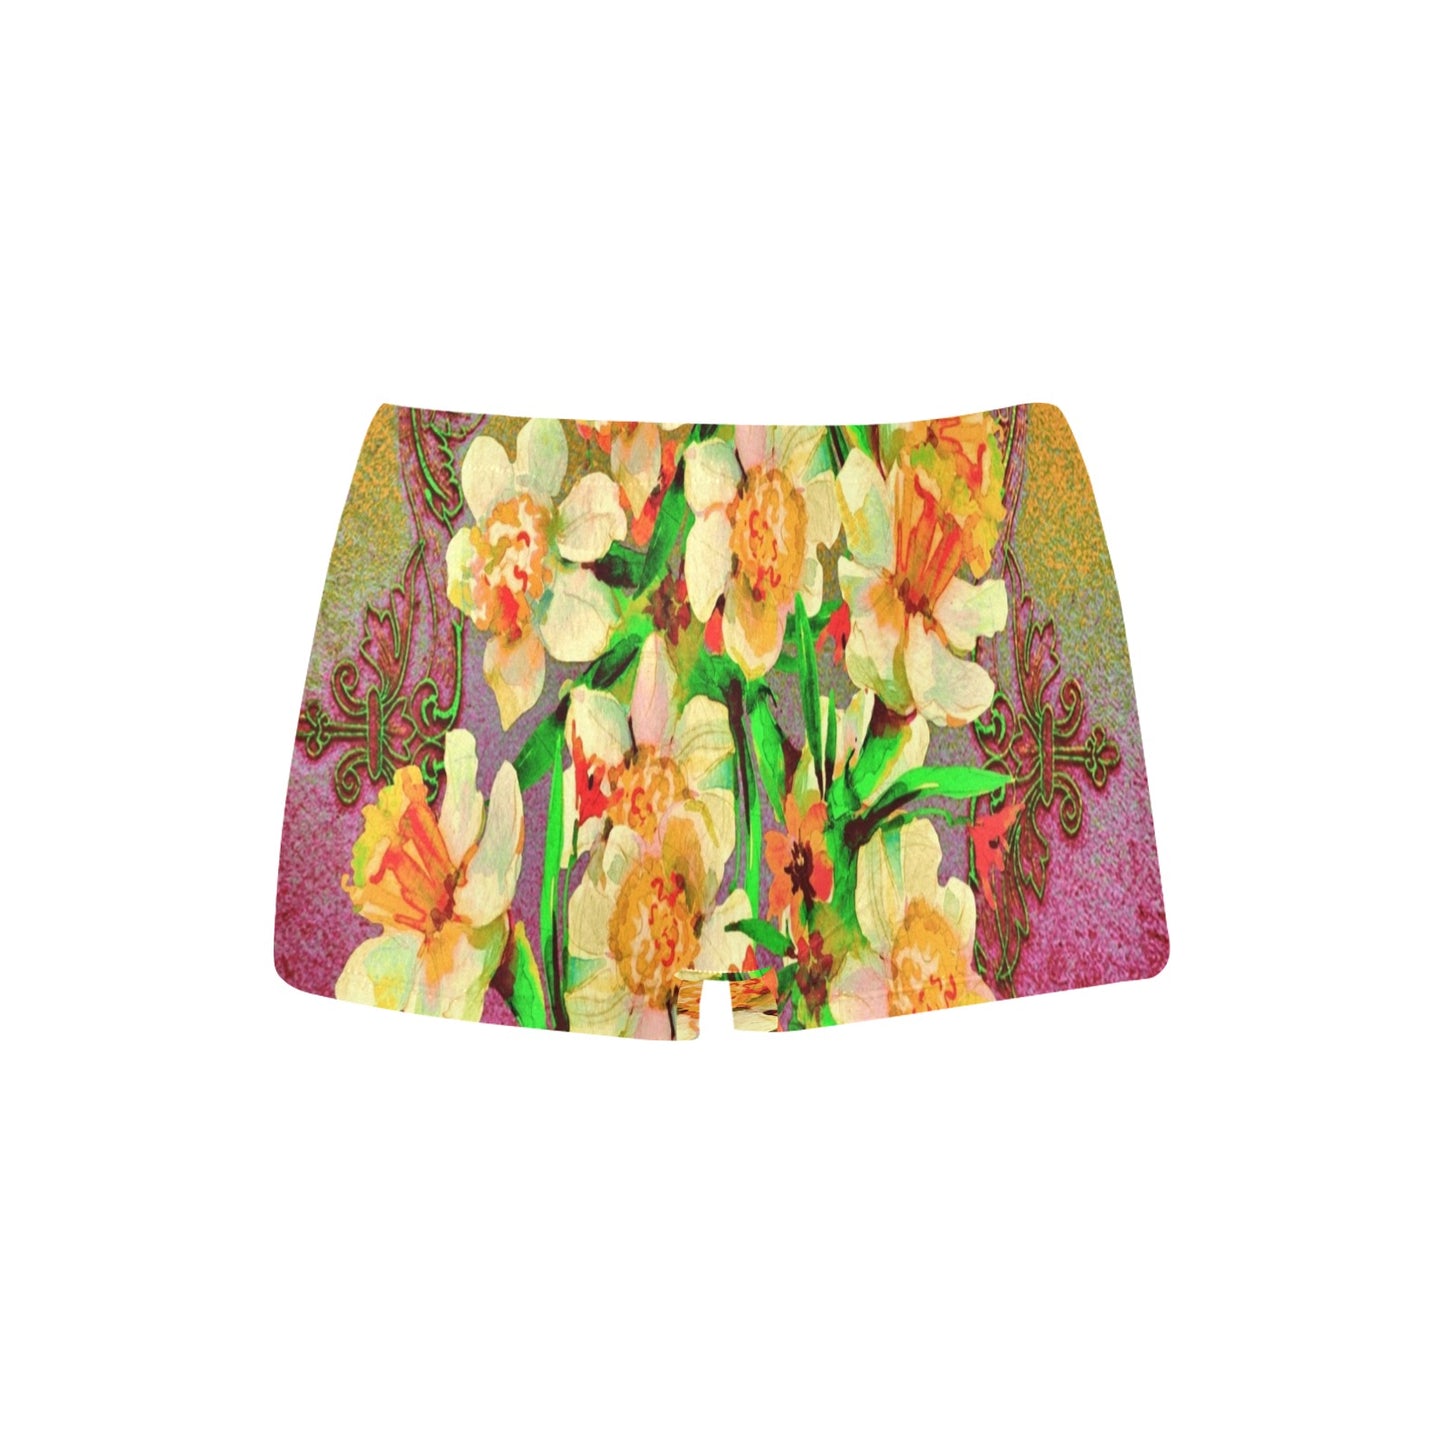 Printed Lace Boyshorts, daisy dukes, pum pum shorts, shortie shorts , design 48